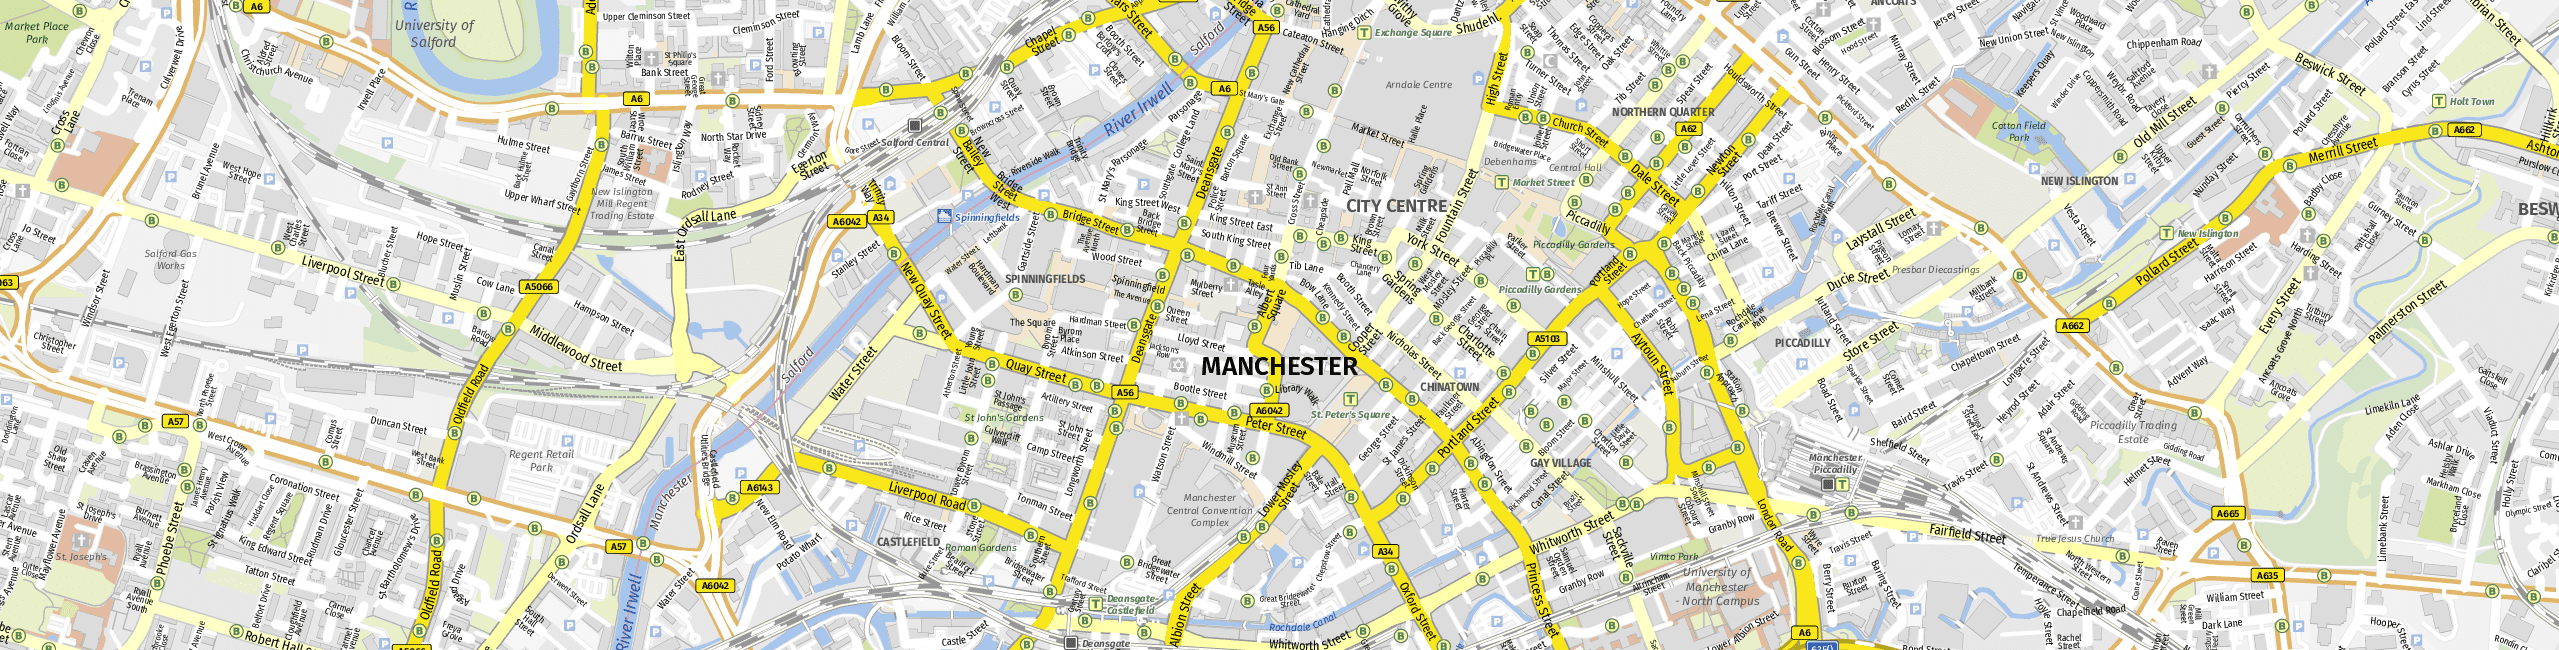 Stadtplan Manchester zum Downloaden.